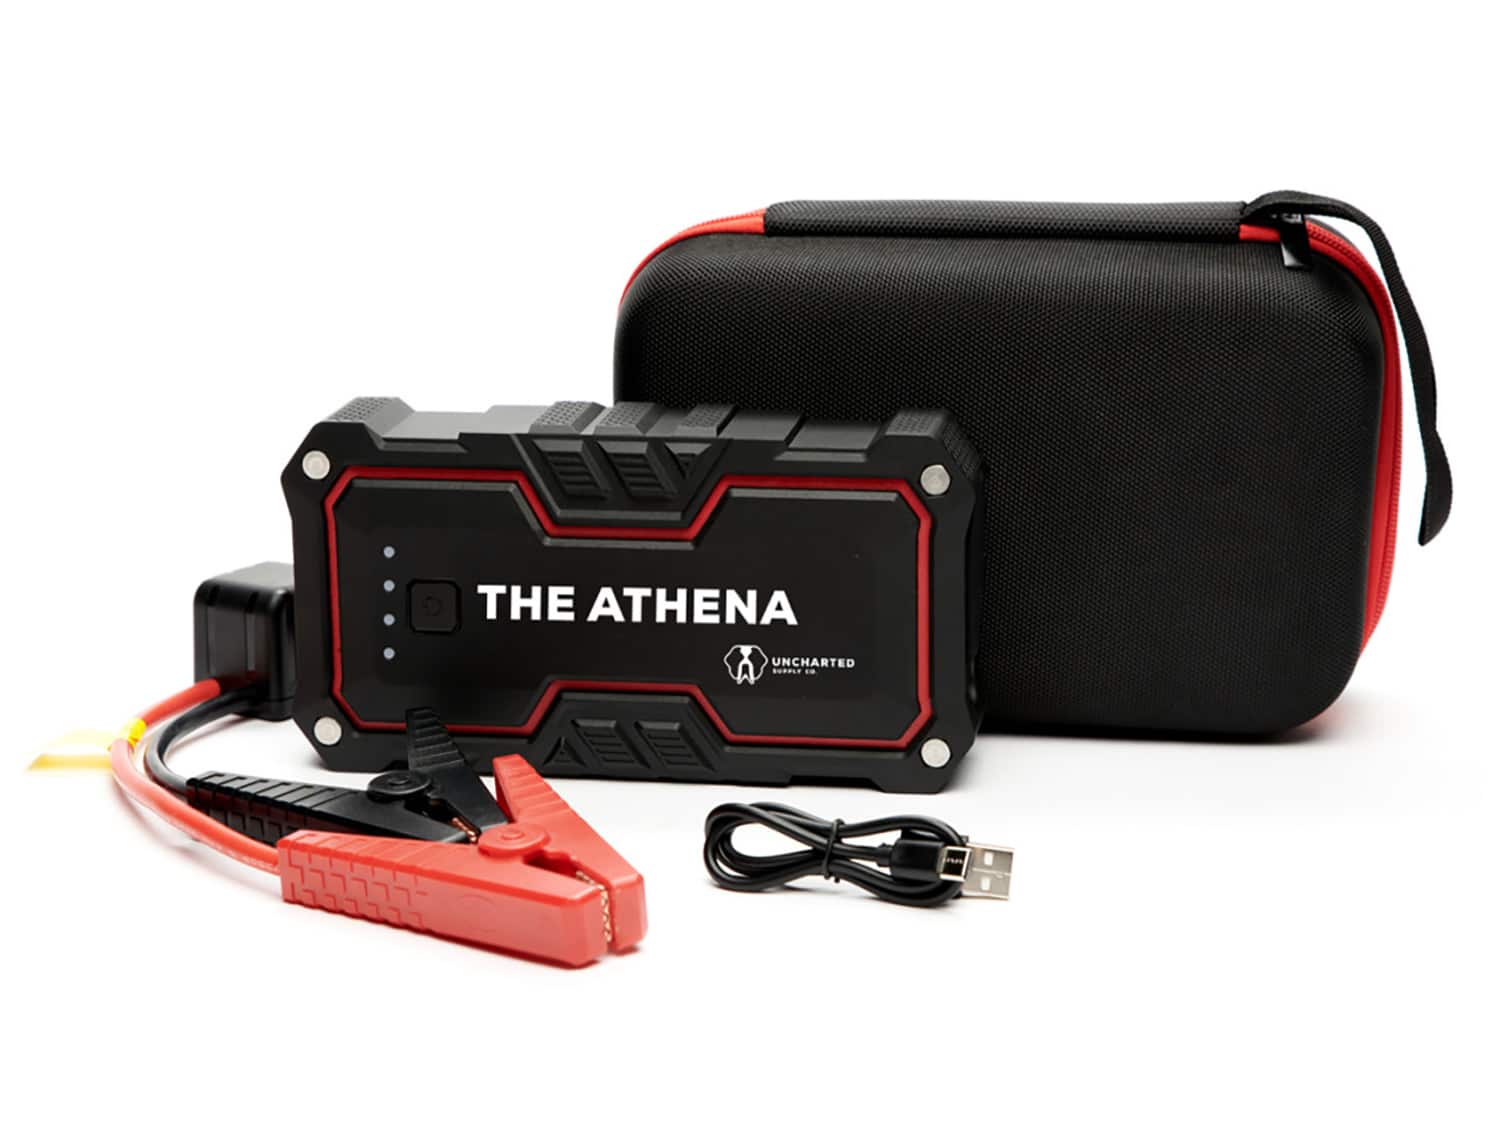 The Athena Portable Energy System